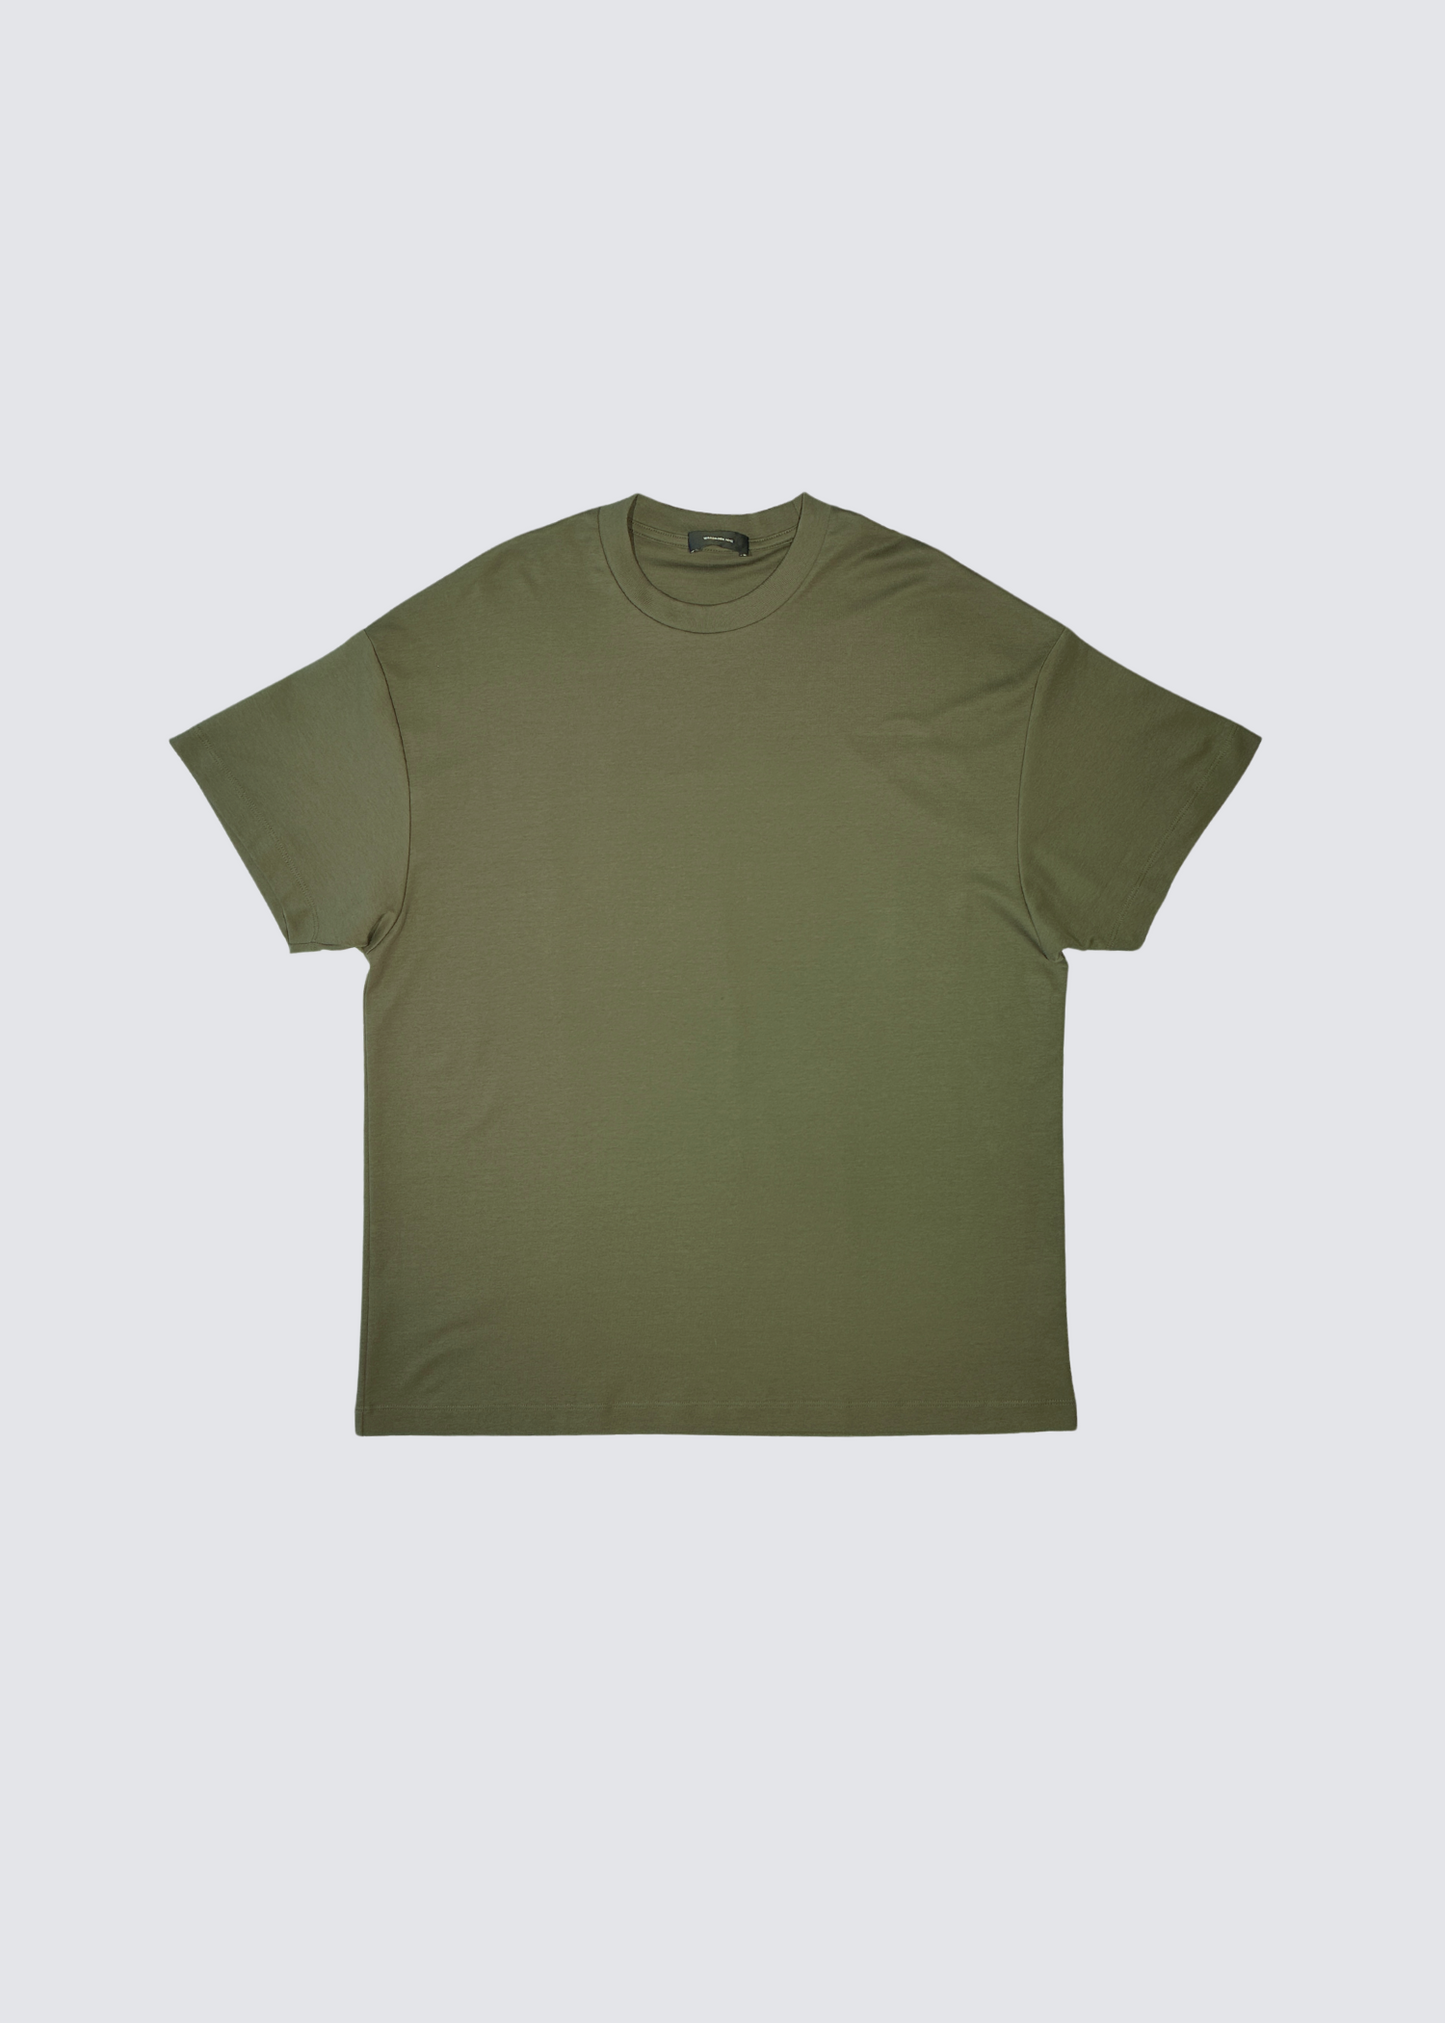 HB Oversize, Military, T-Shirt